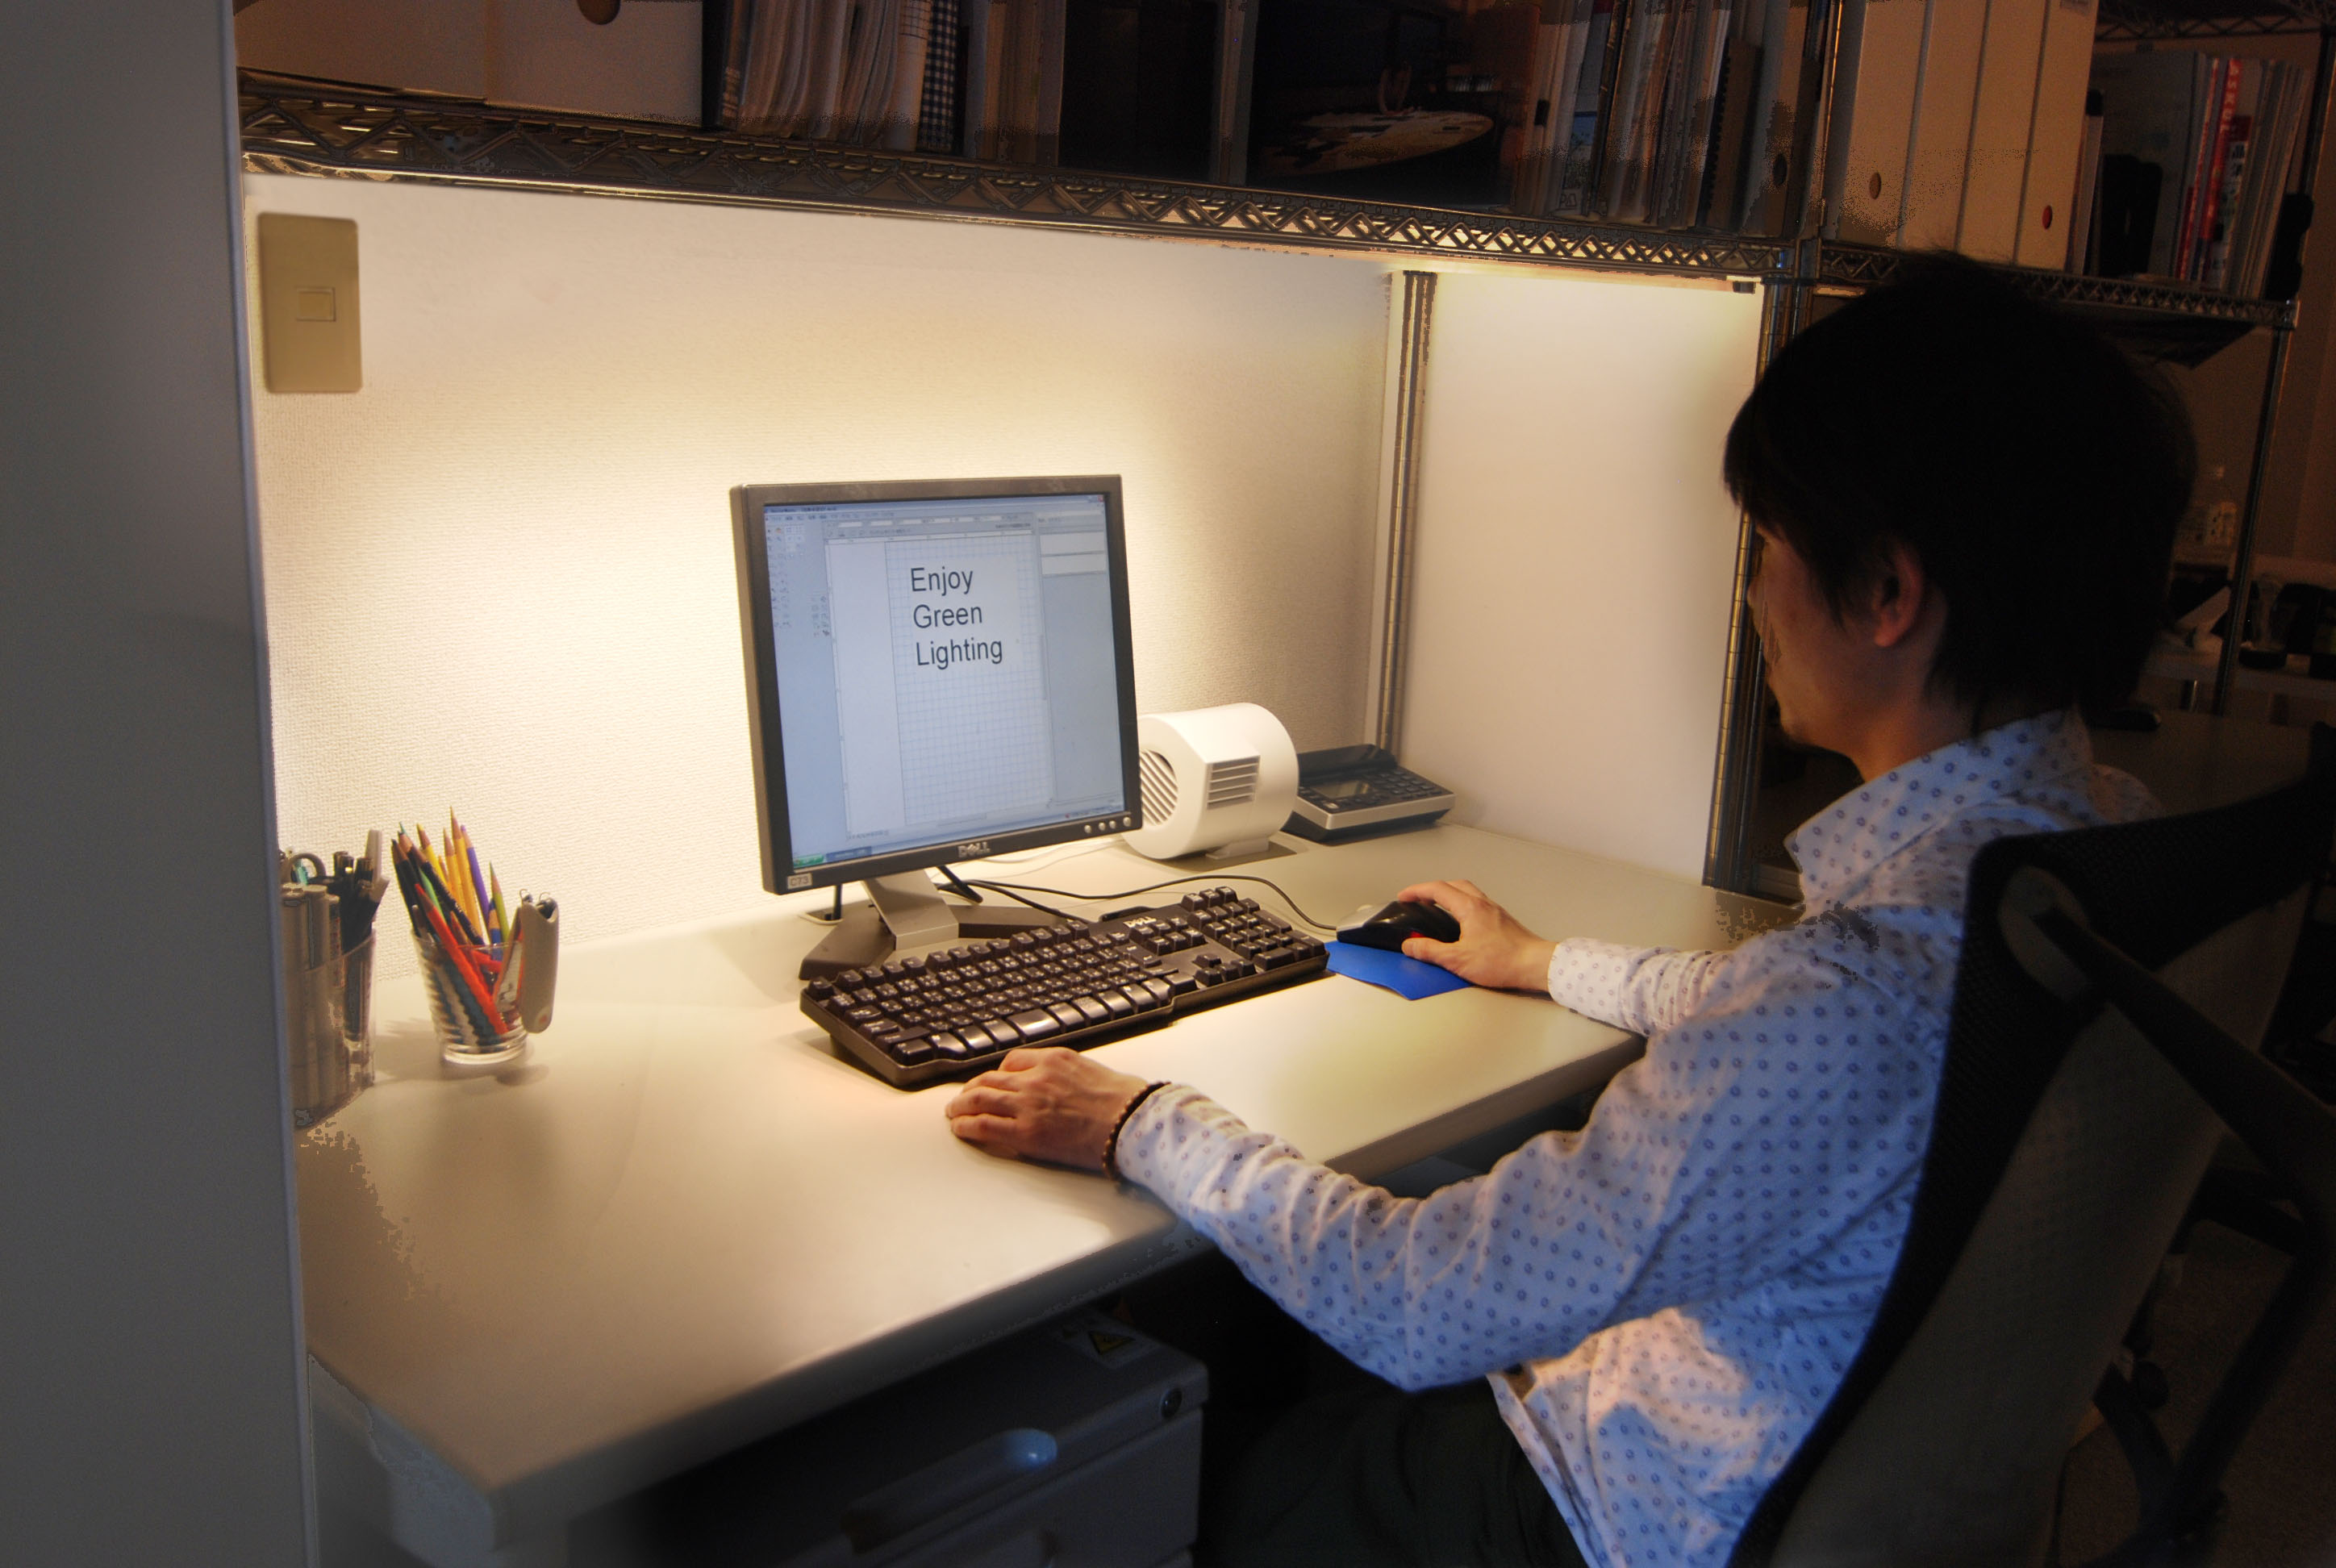 Enjoy Green Lighting - Office Lighting, Eco Ideas for Fun Office Lighting